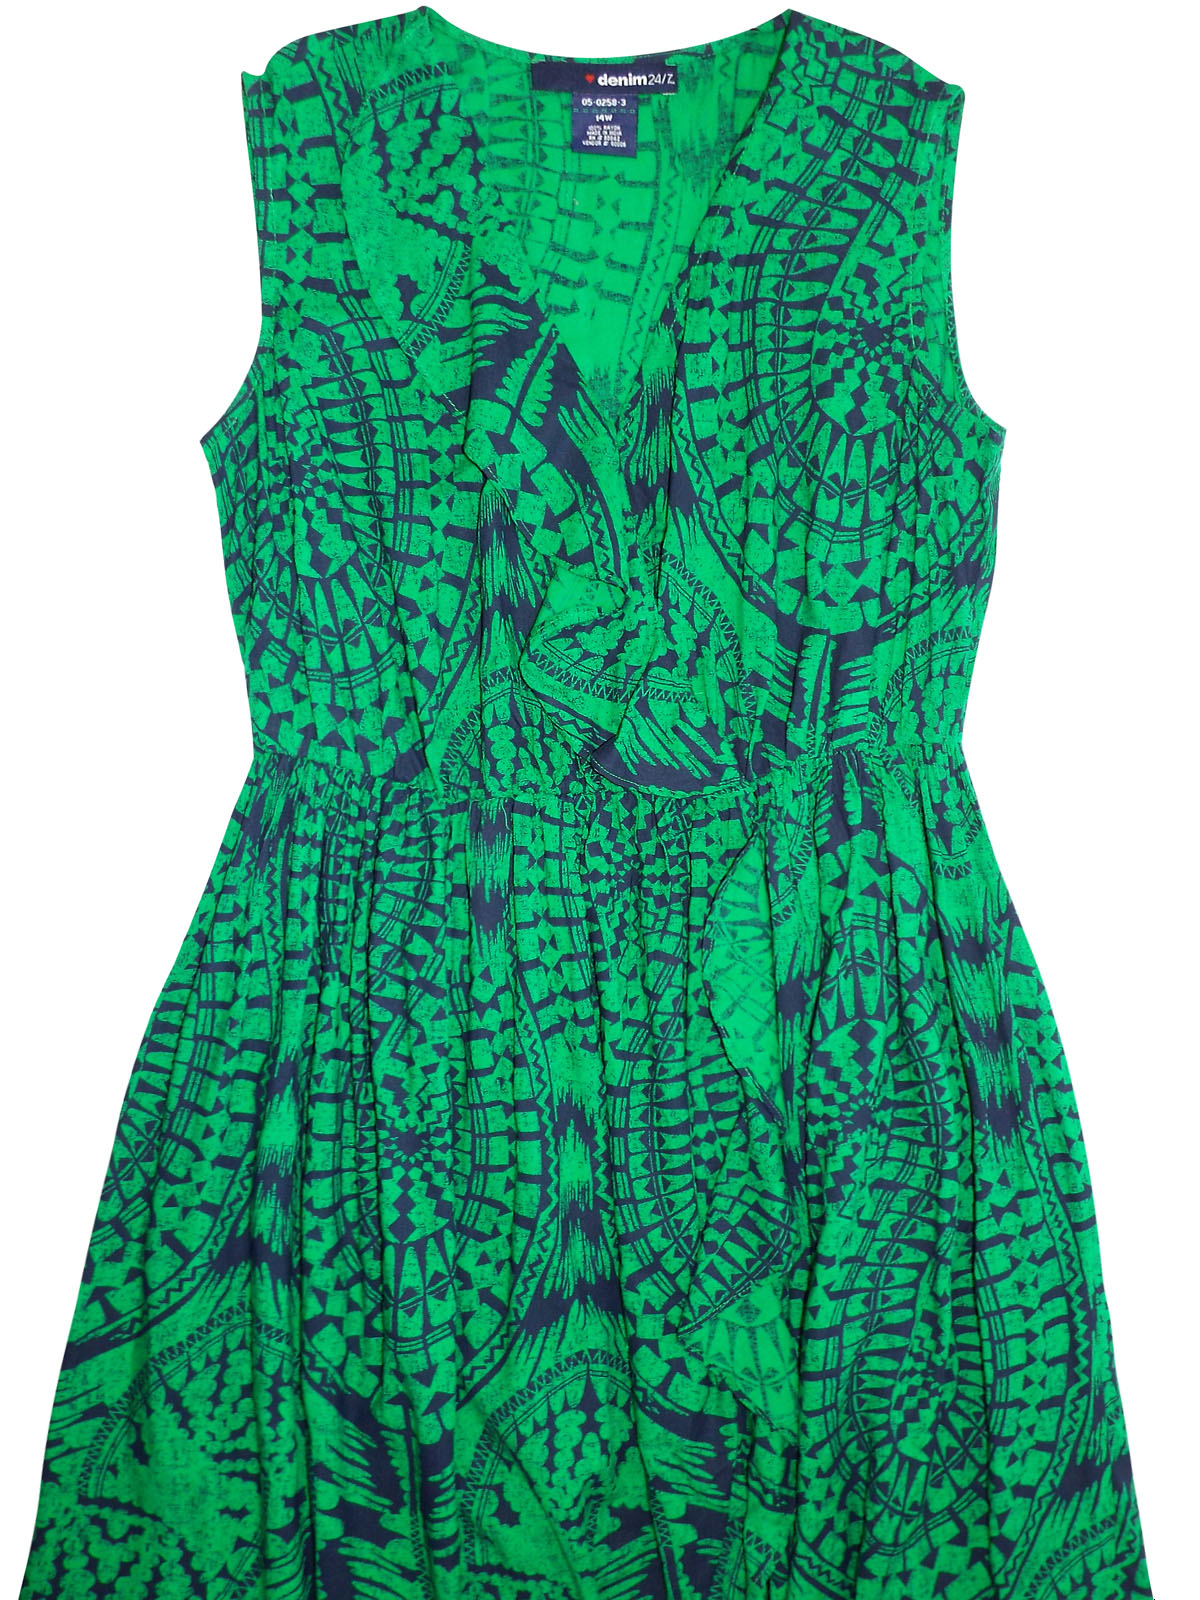 Denim 24/7 - - Denim 24/7 GREEN Wrap Front Printed Frill Dress - Plus ...